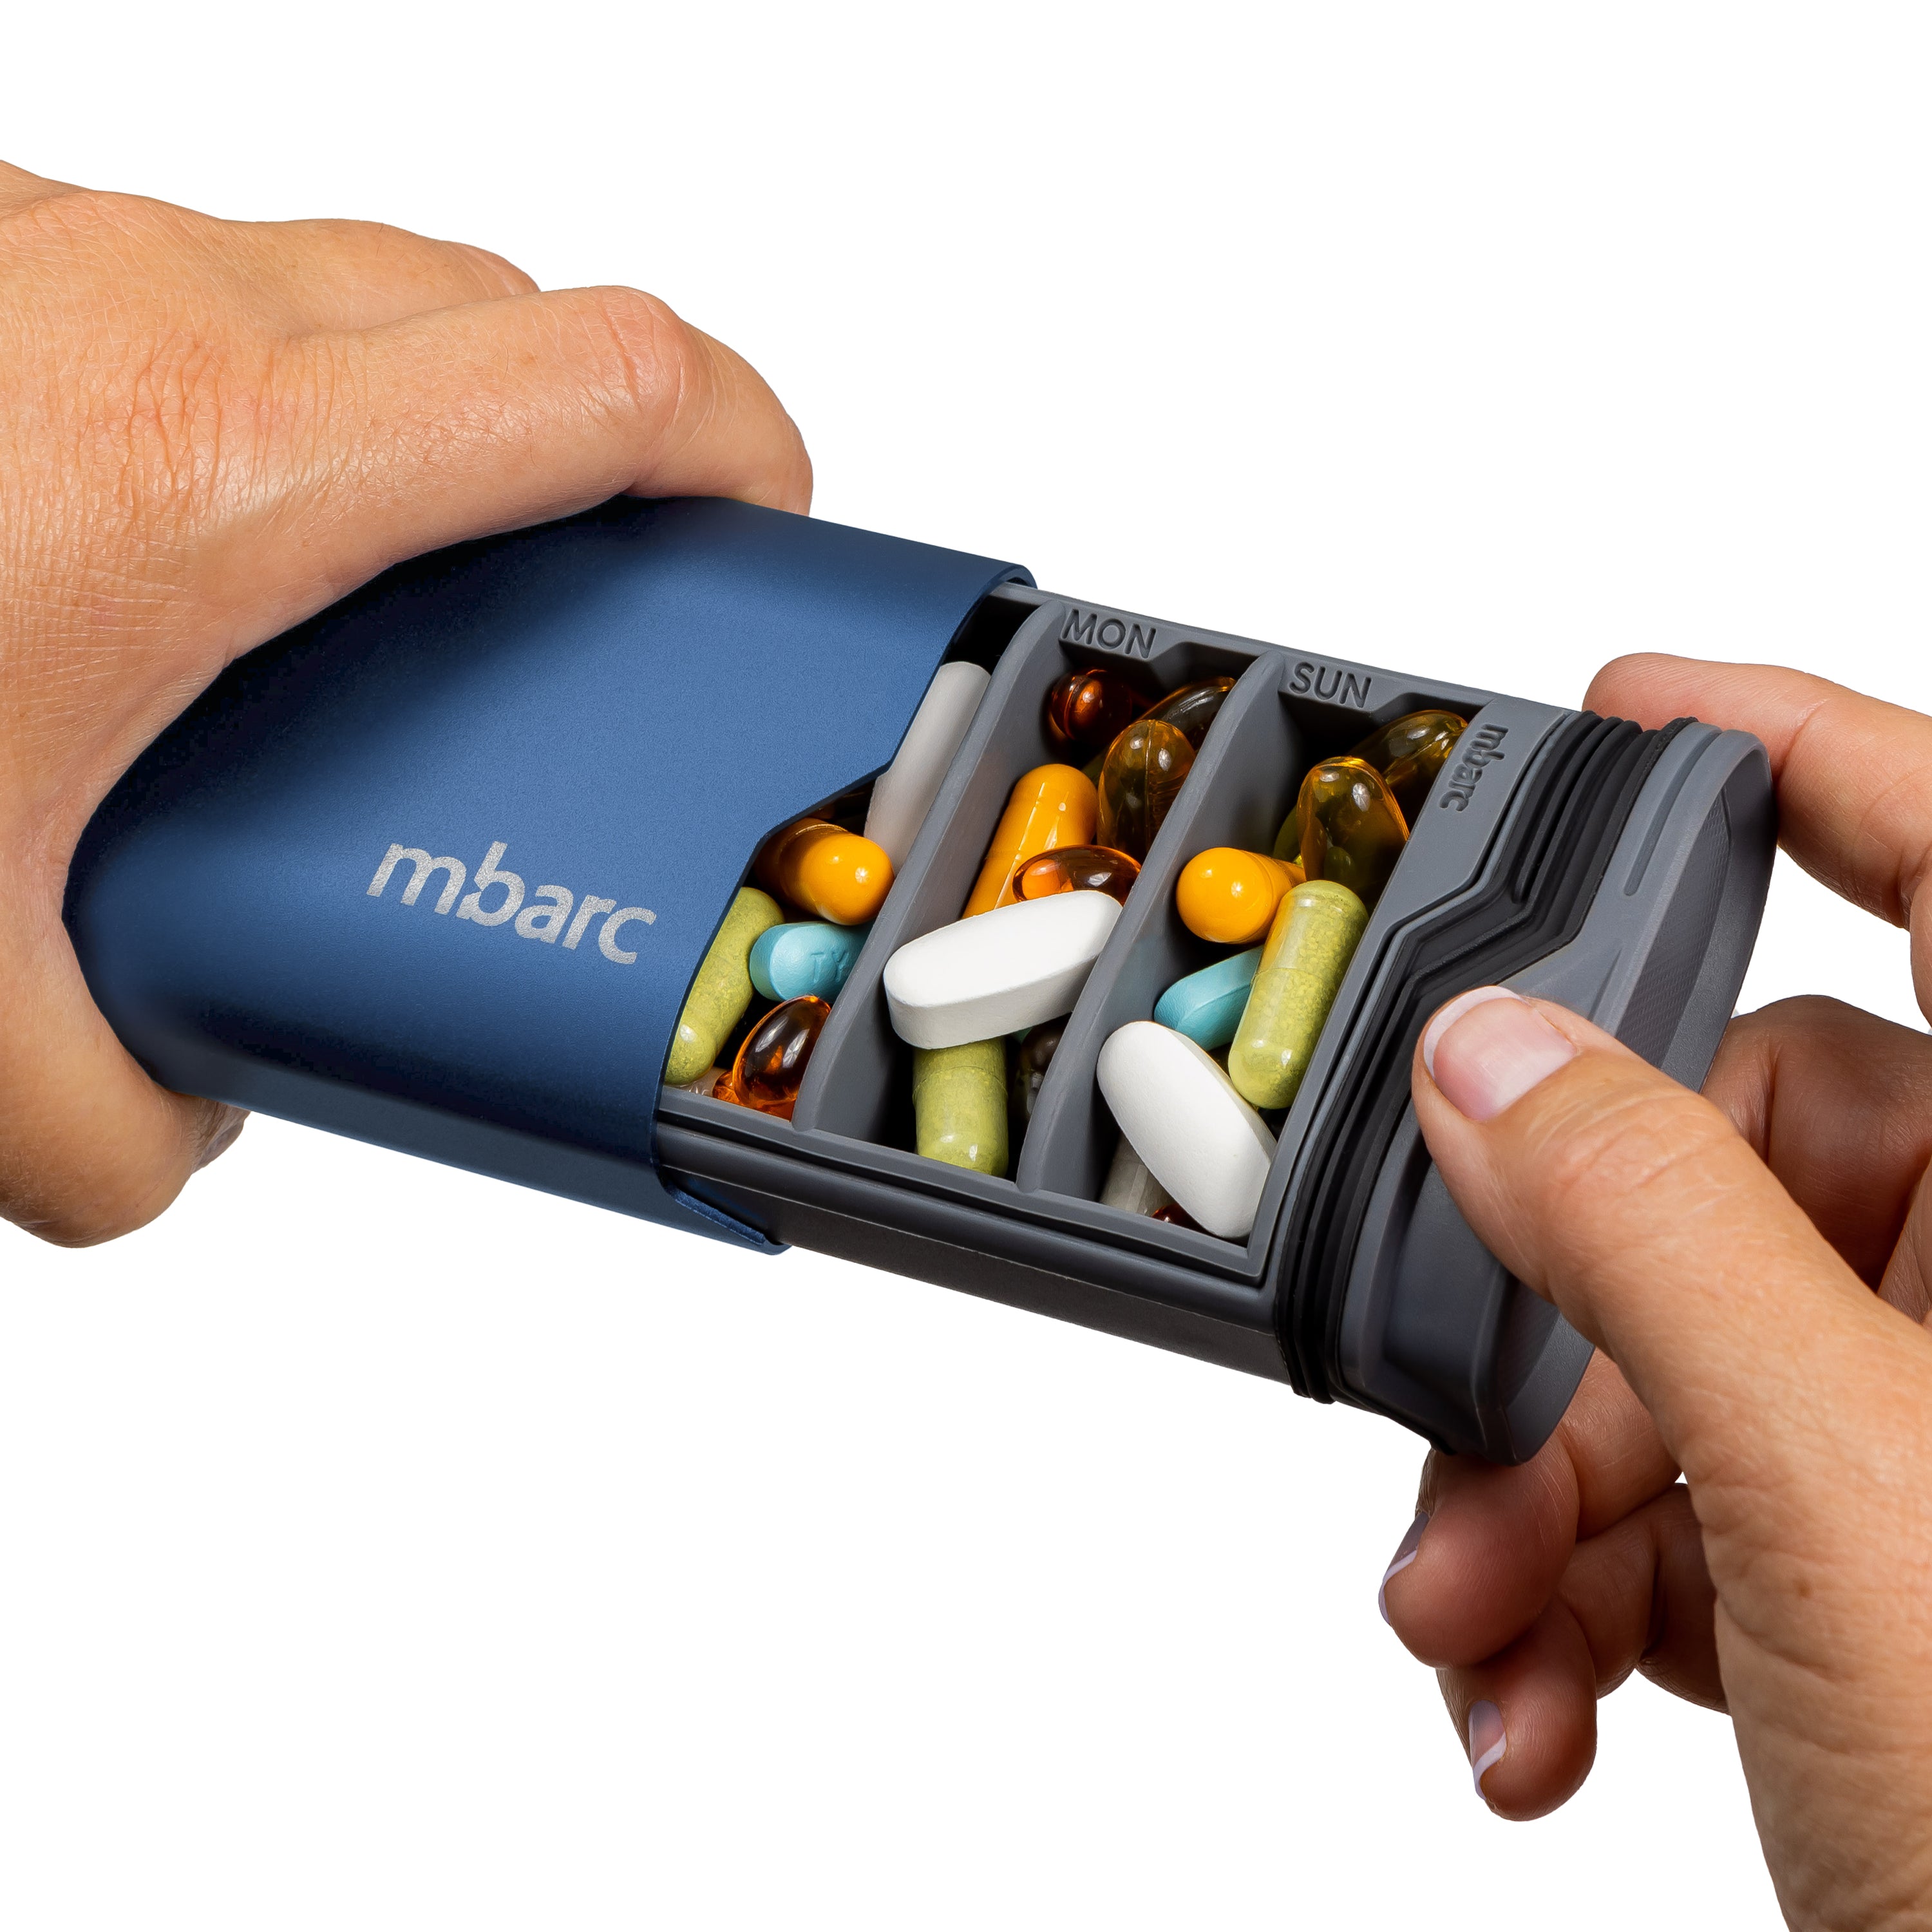 Slim Pill Box Weekly Medication Supplement Vitamin Travel Holder 7-Day Organizer